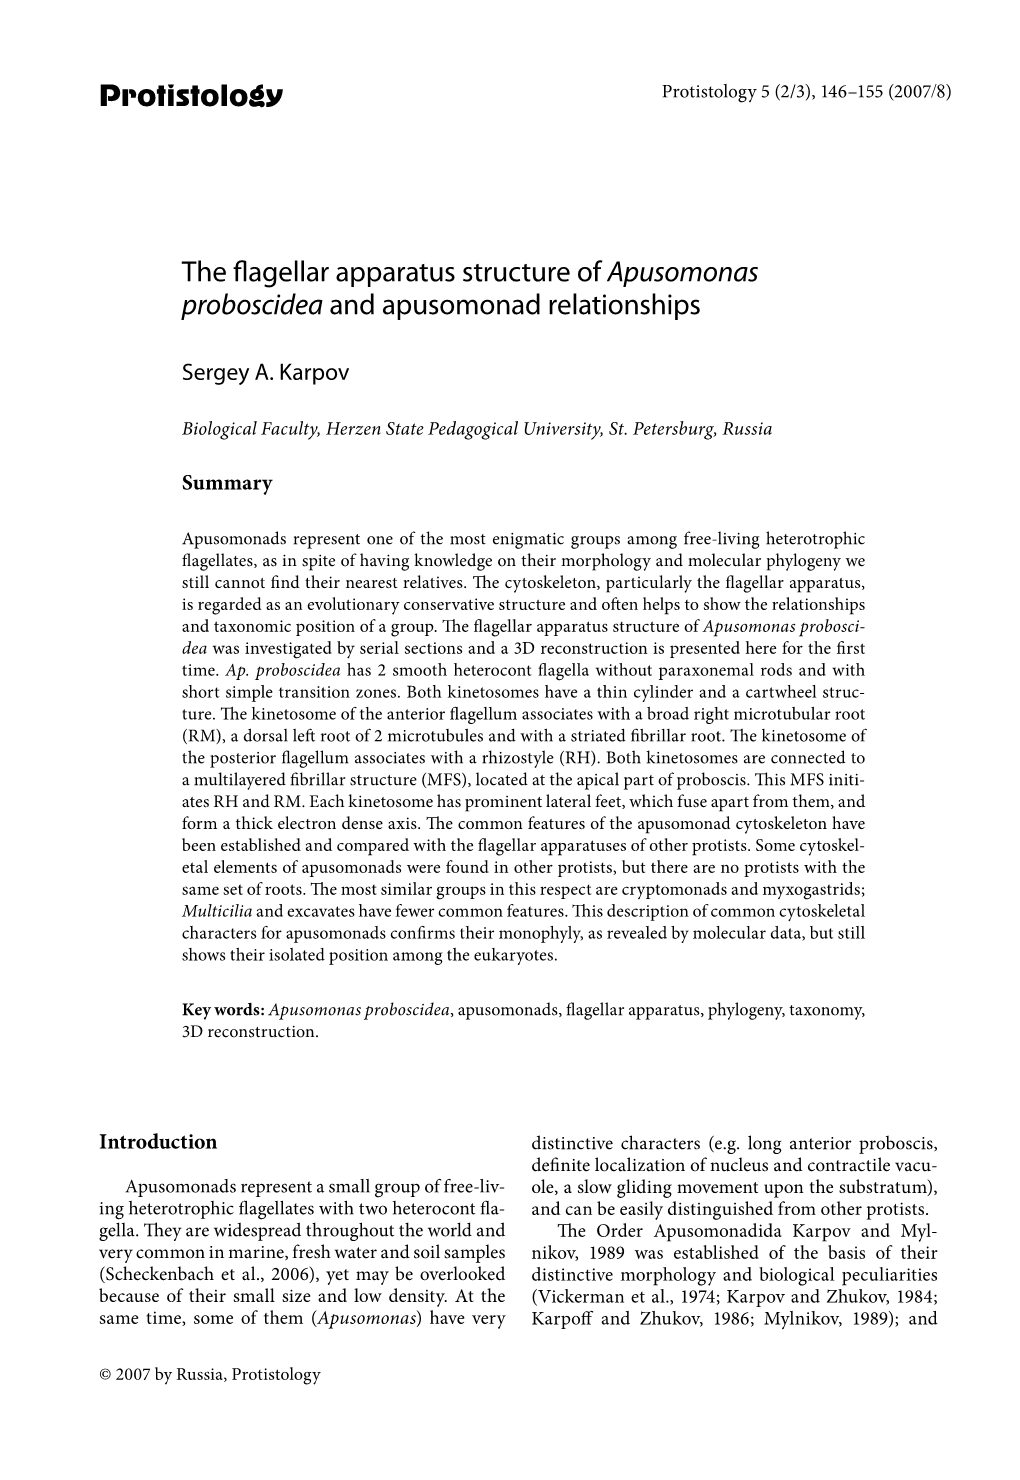 Protistology the Flagellar Apparatus Structure of Apusomonas